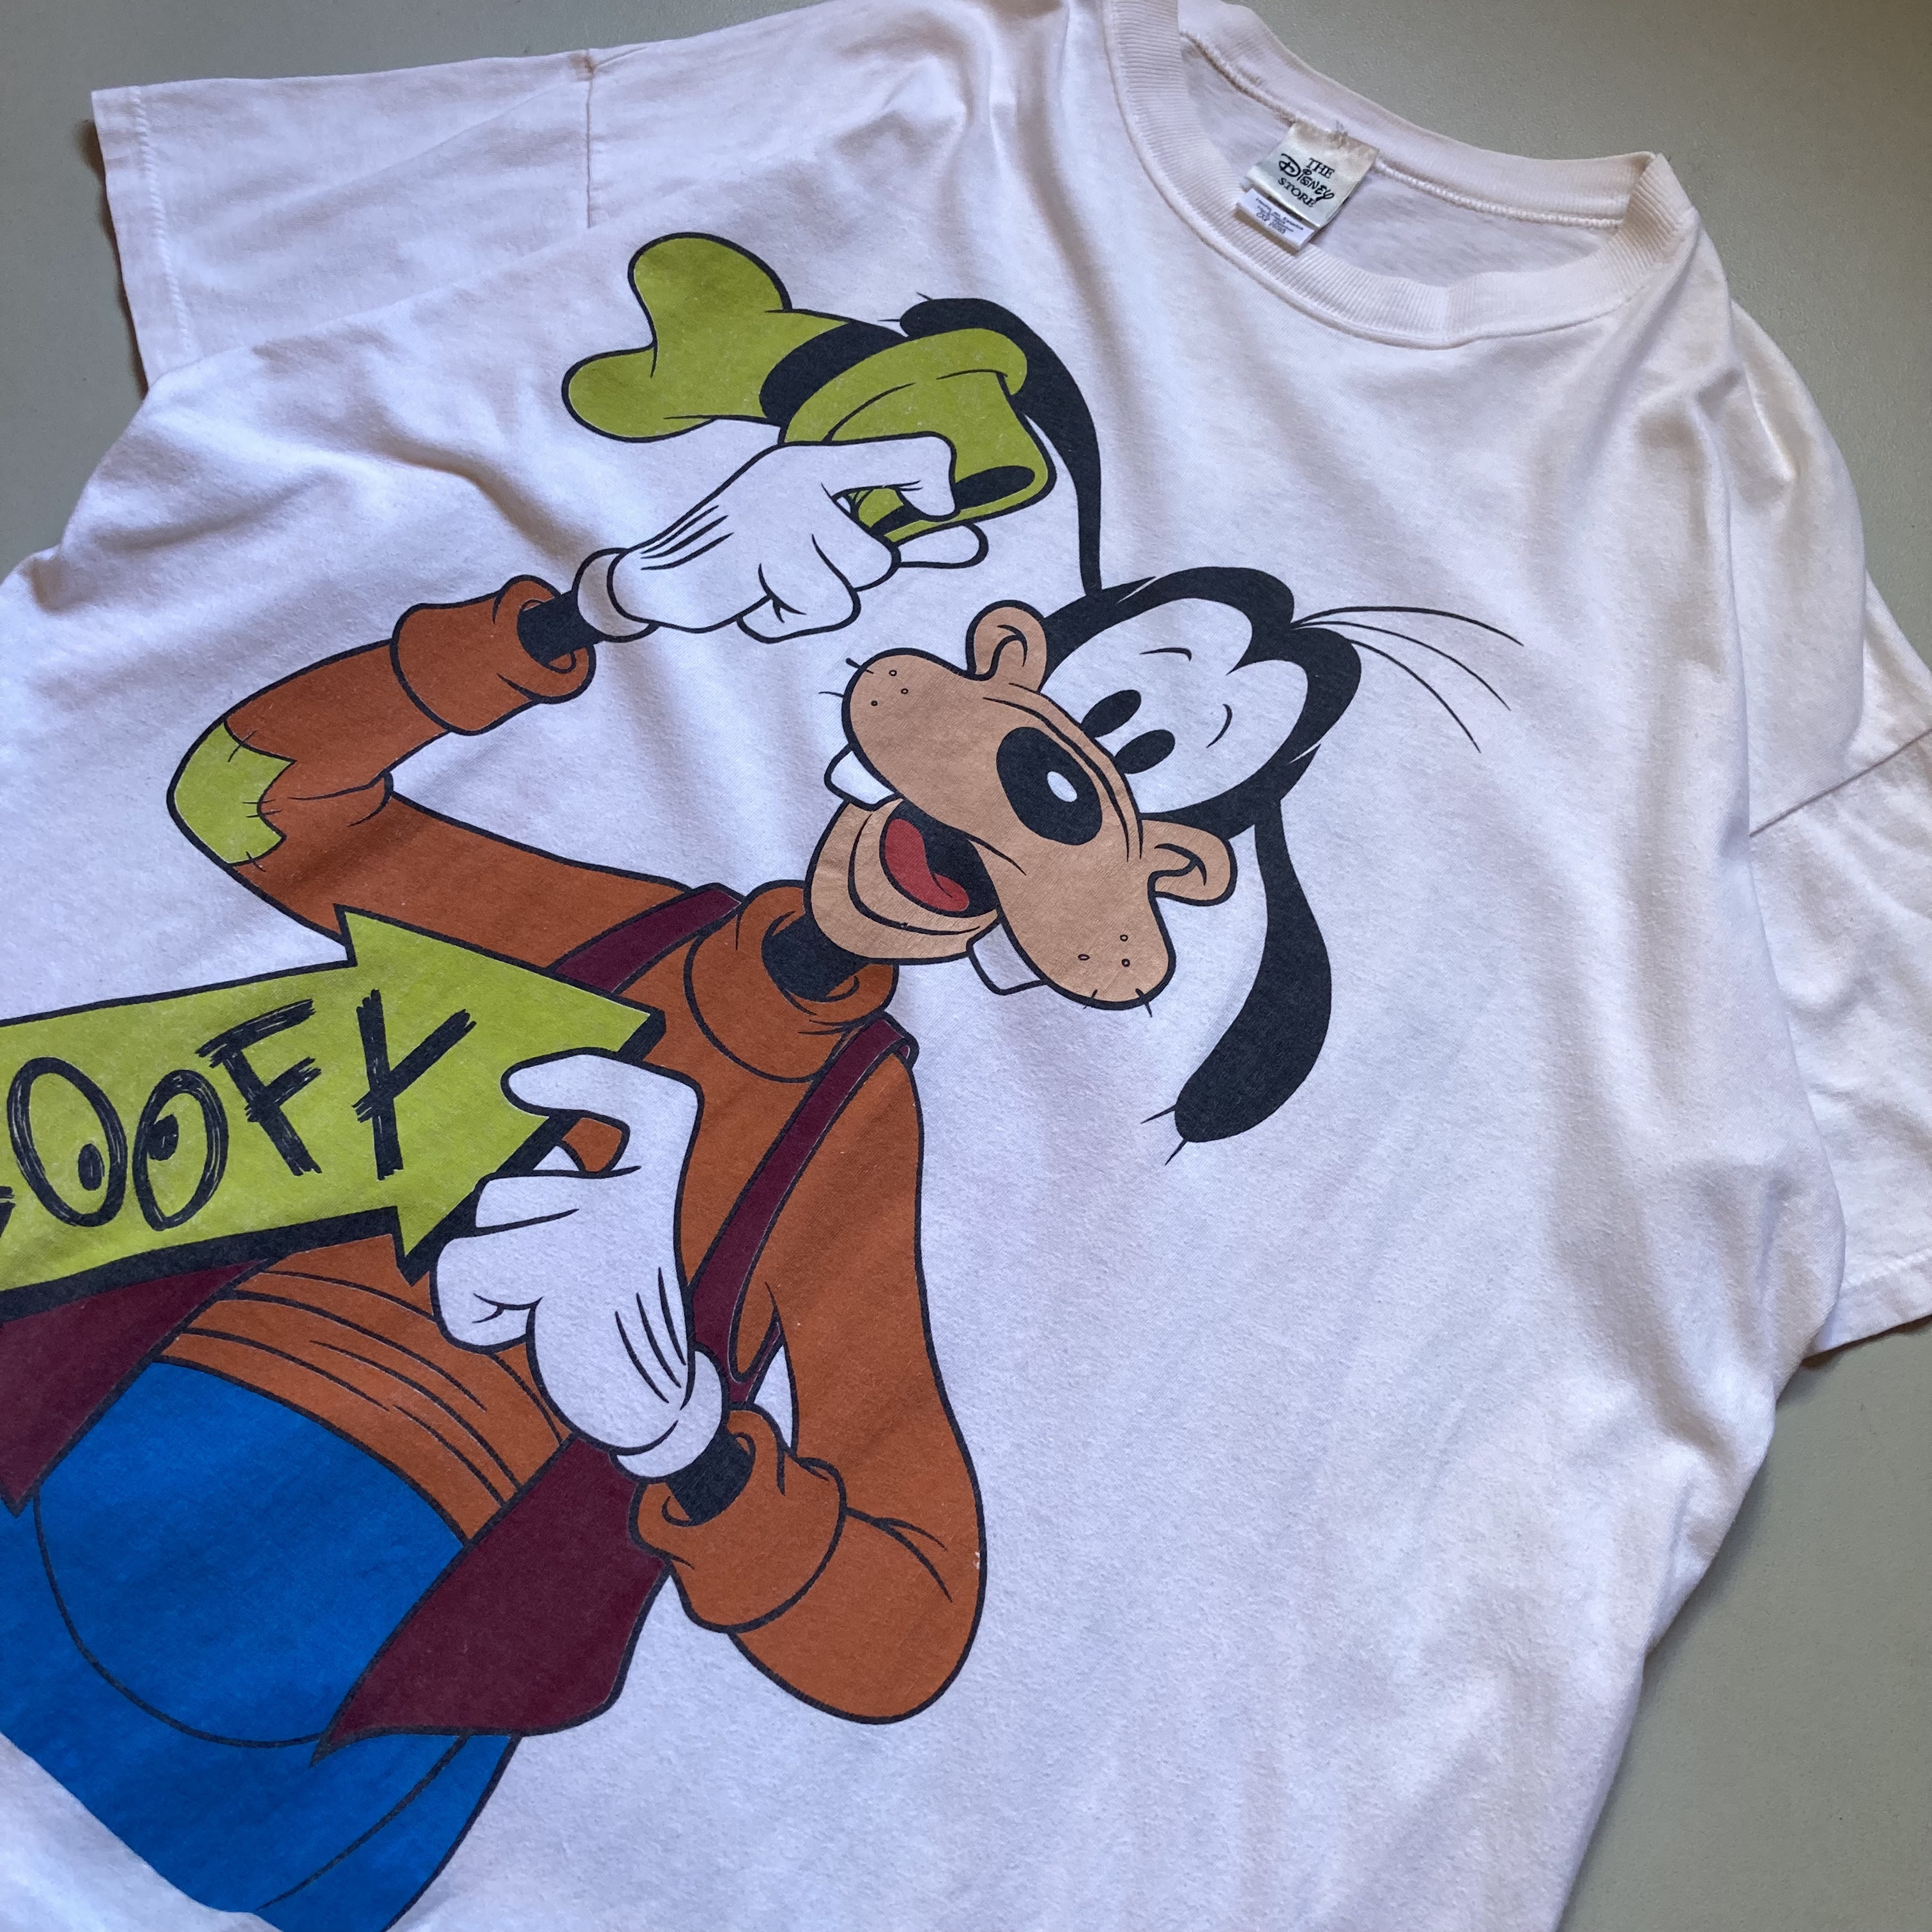 goofy グーフィー tシャツ 90s